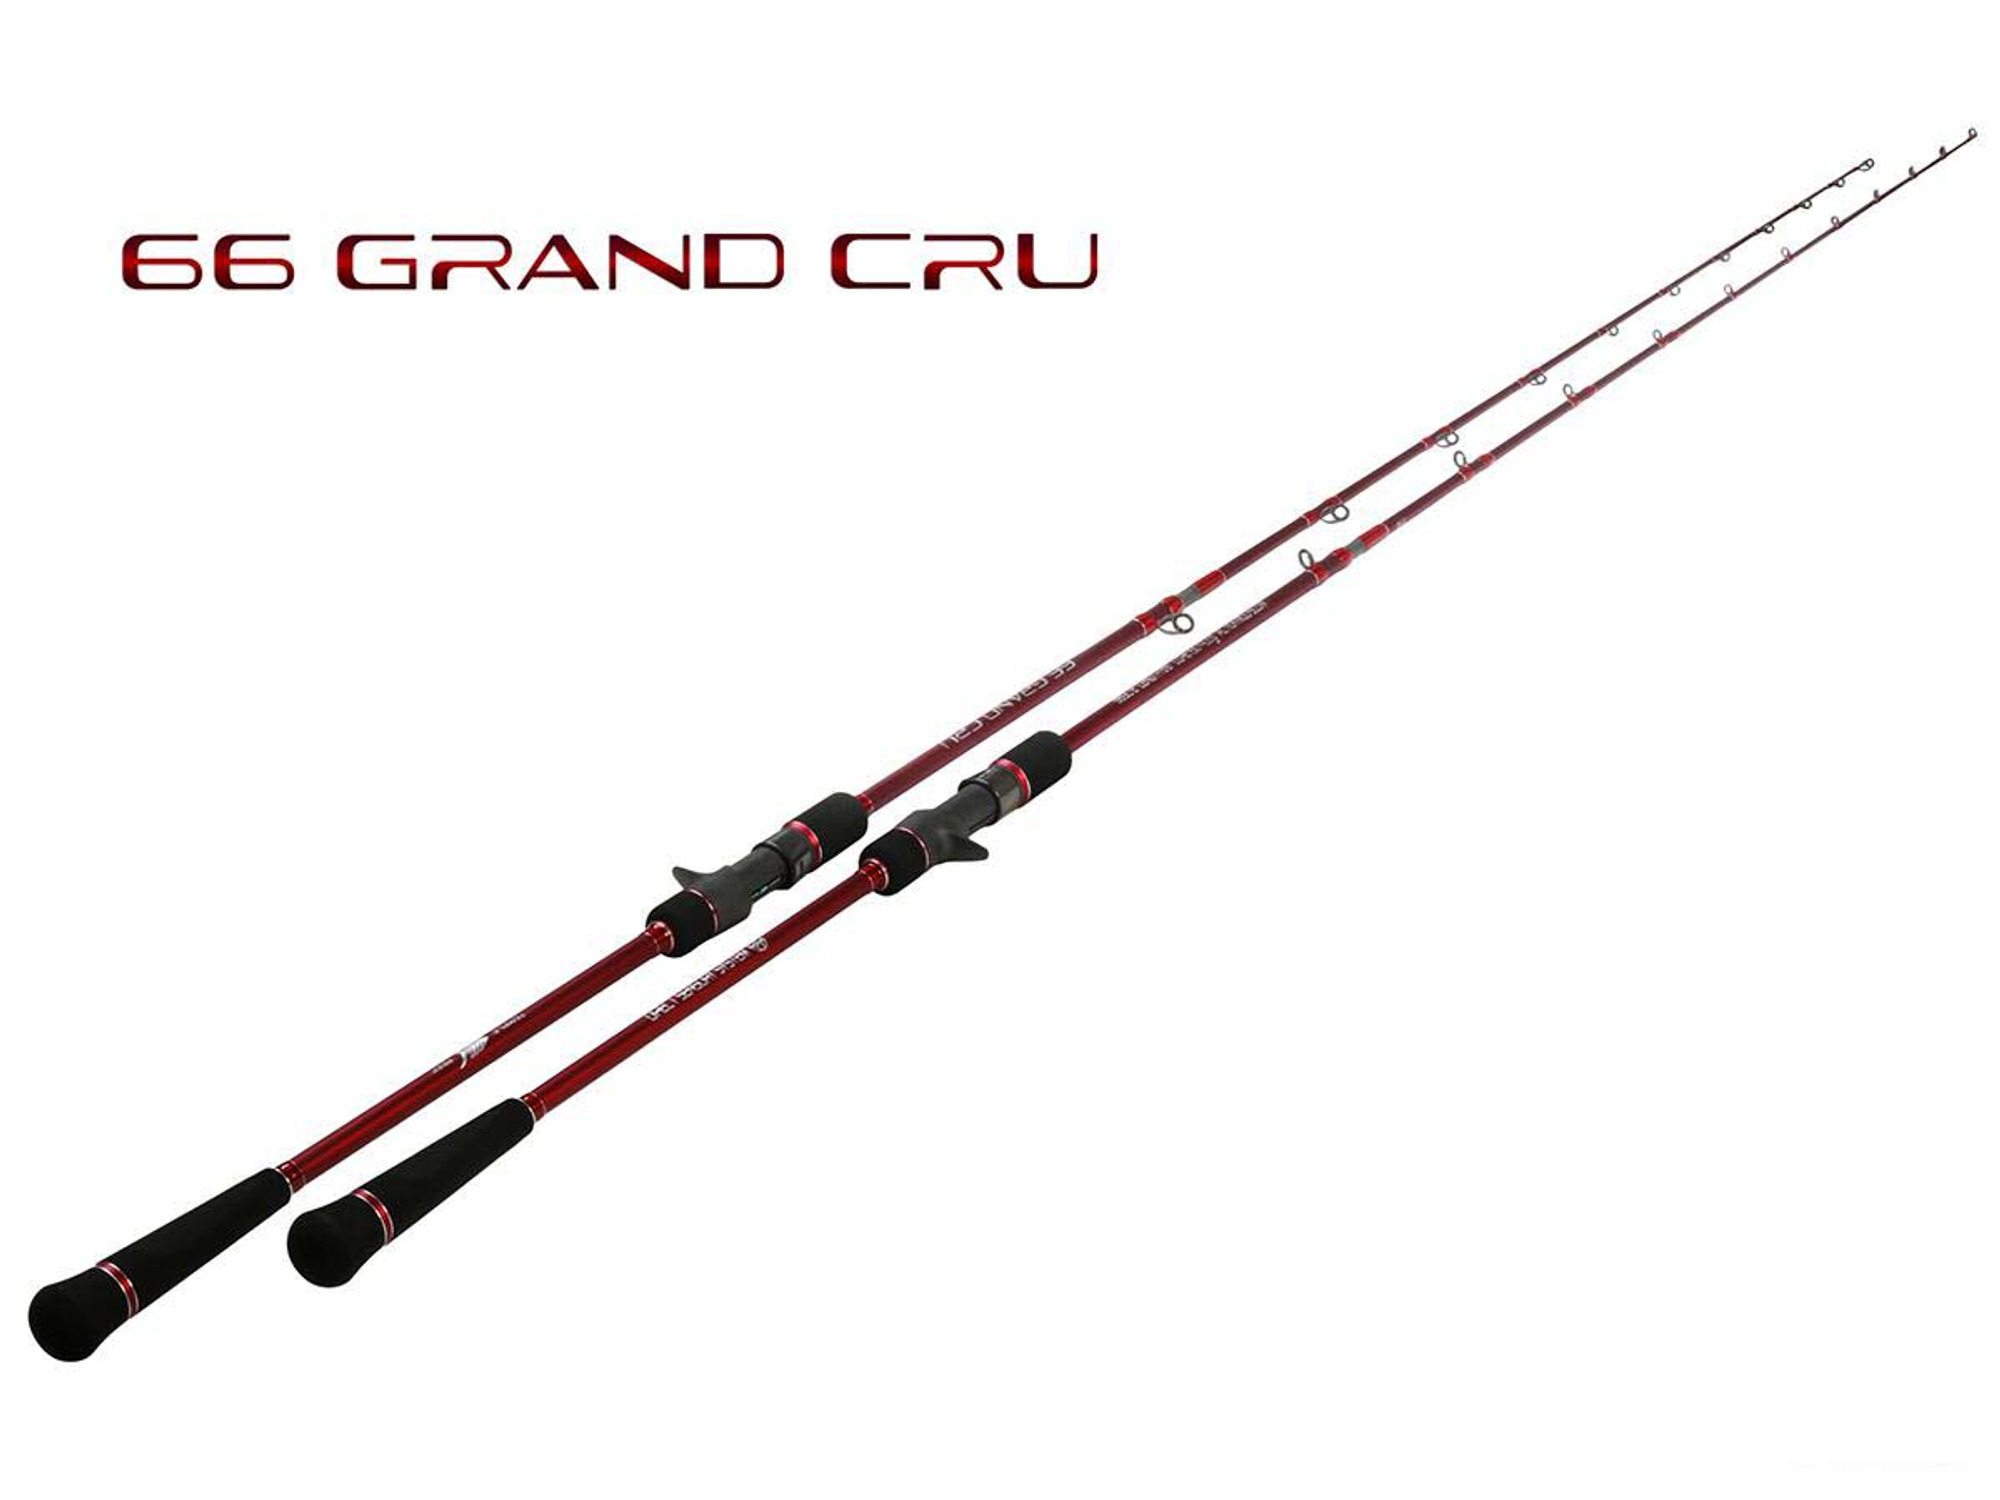 Temple Reef Grand Cru Slow Pitch Jig Fishing Rod (Model: 66GC-3)